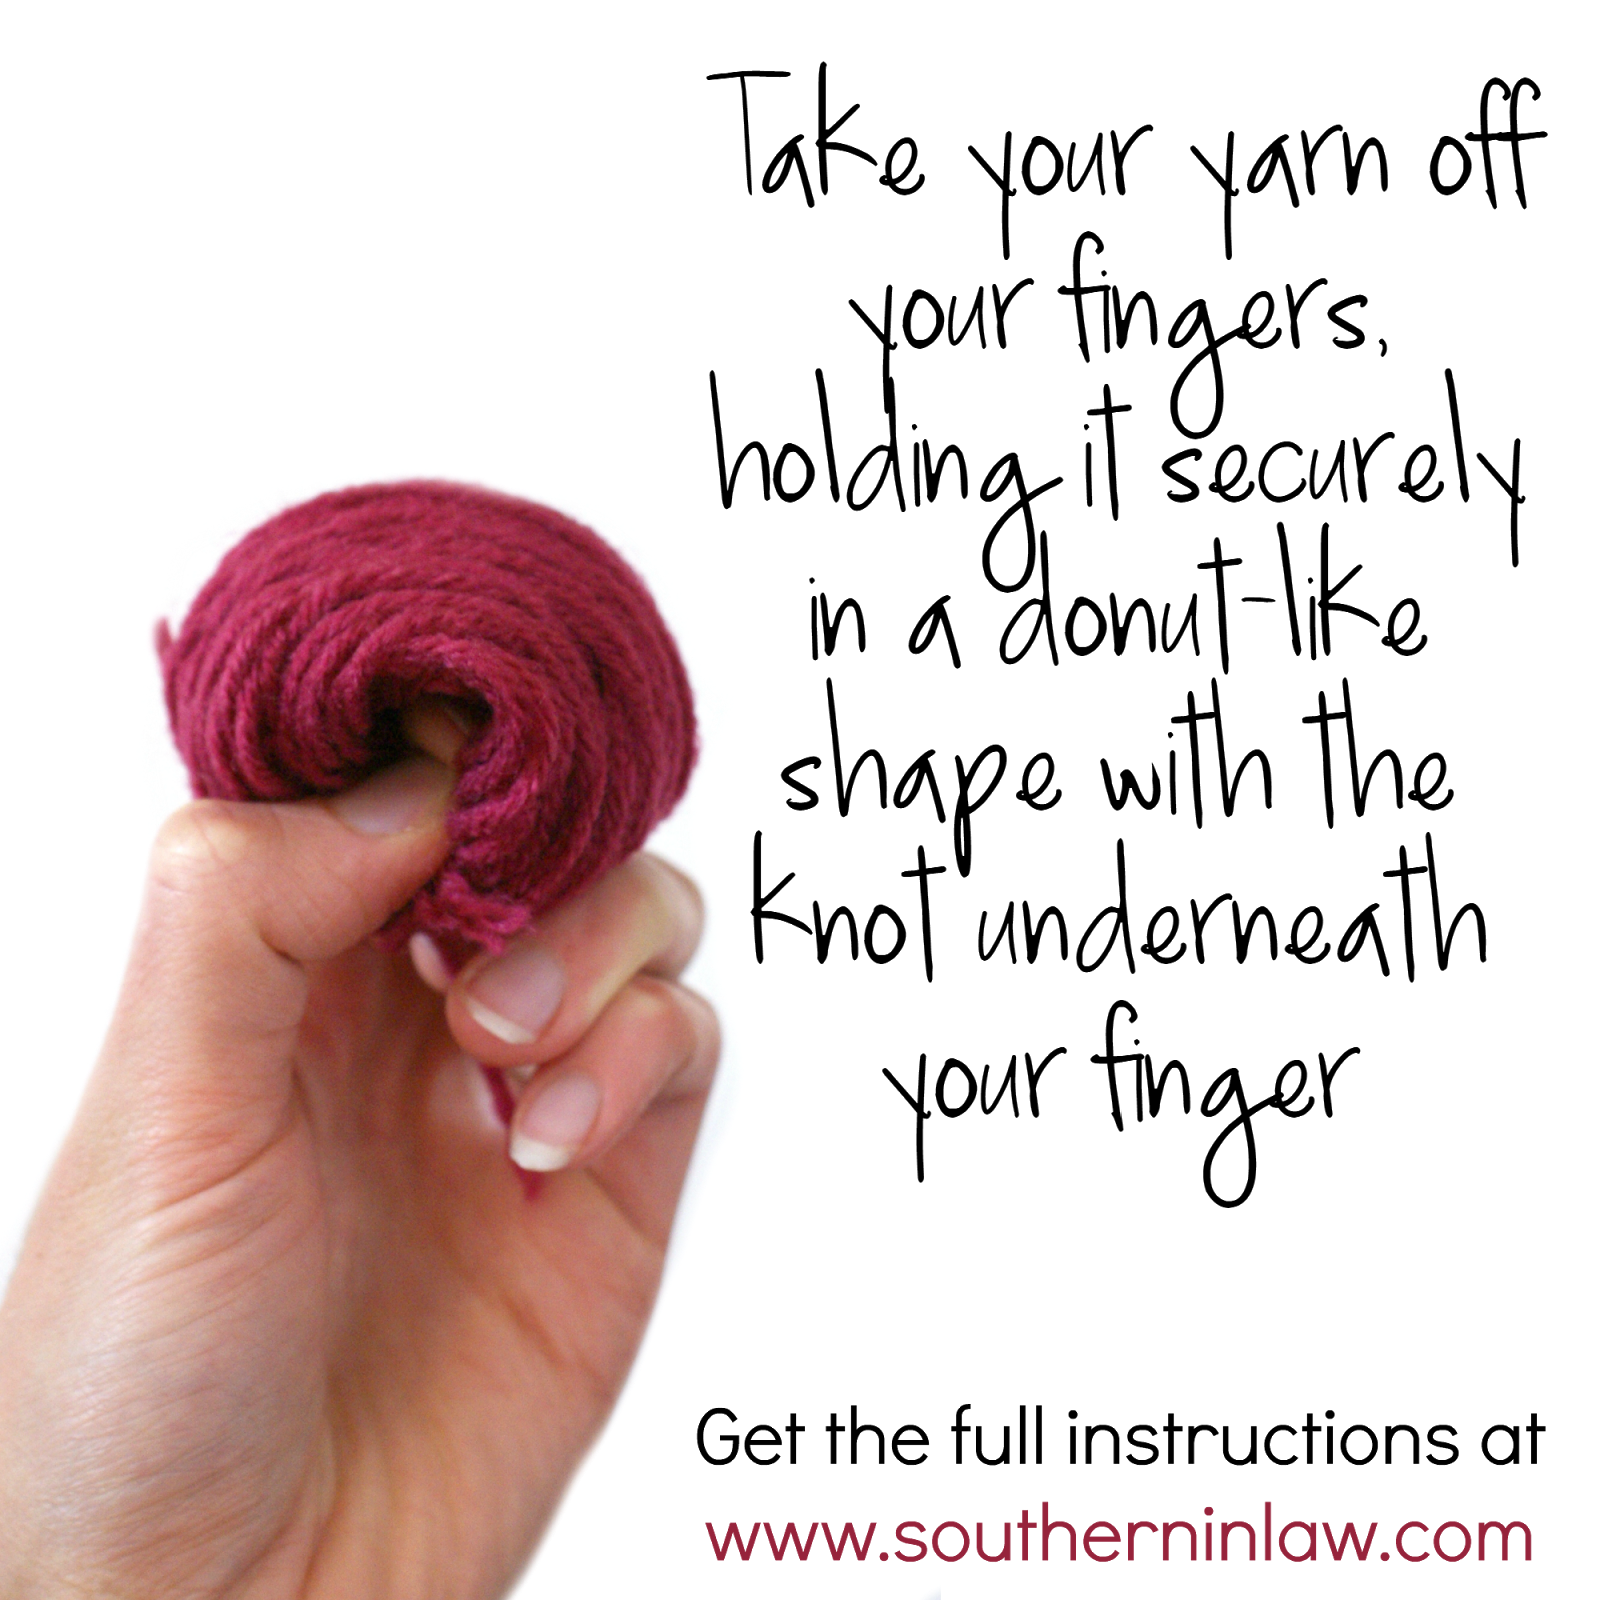 DIY Pom Pom Garland Tutorial - How to Make Pom Poms with Knitting Yarn 